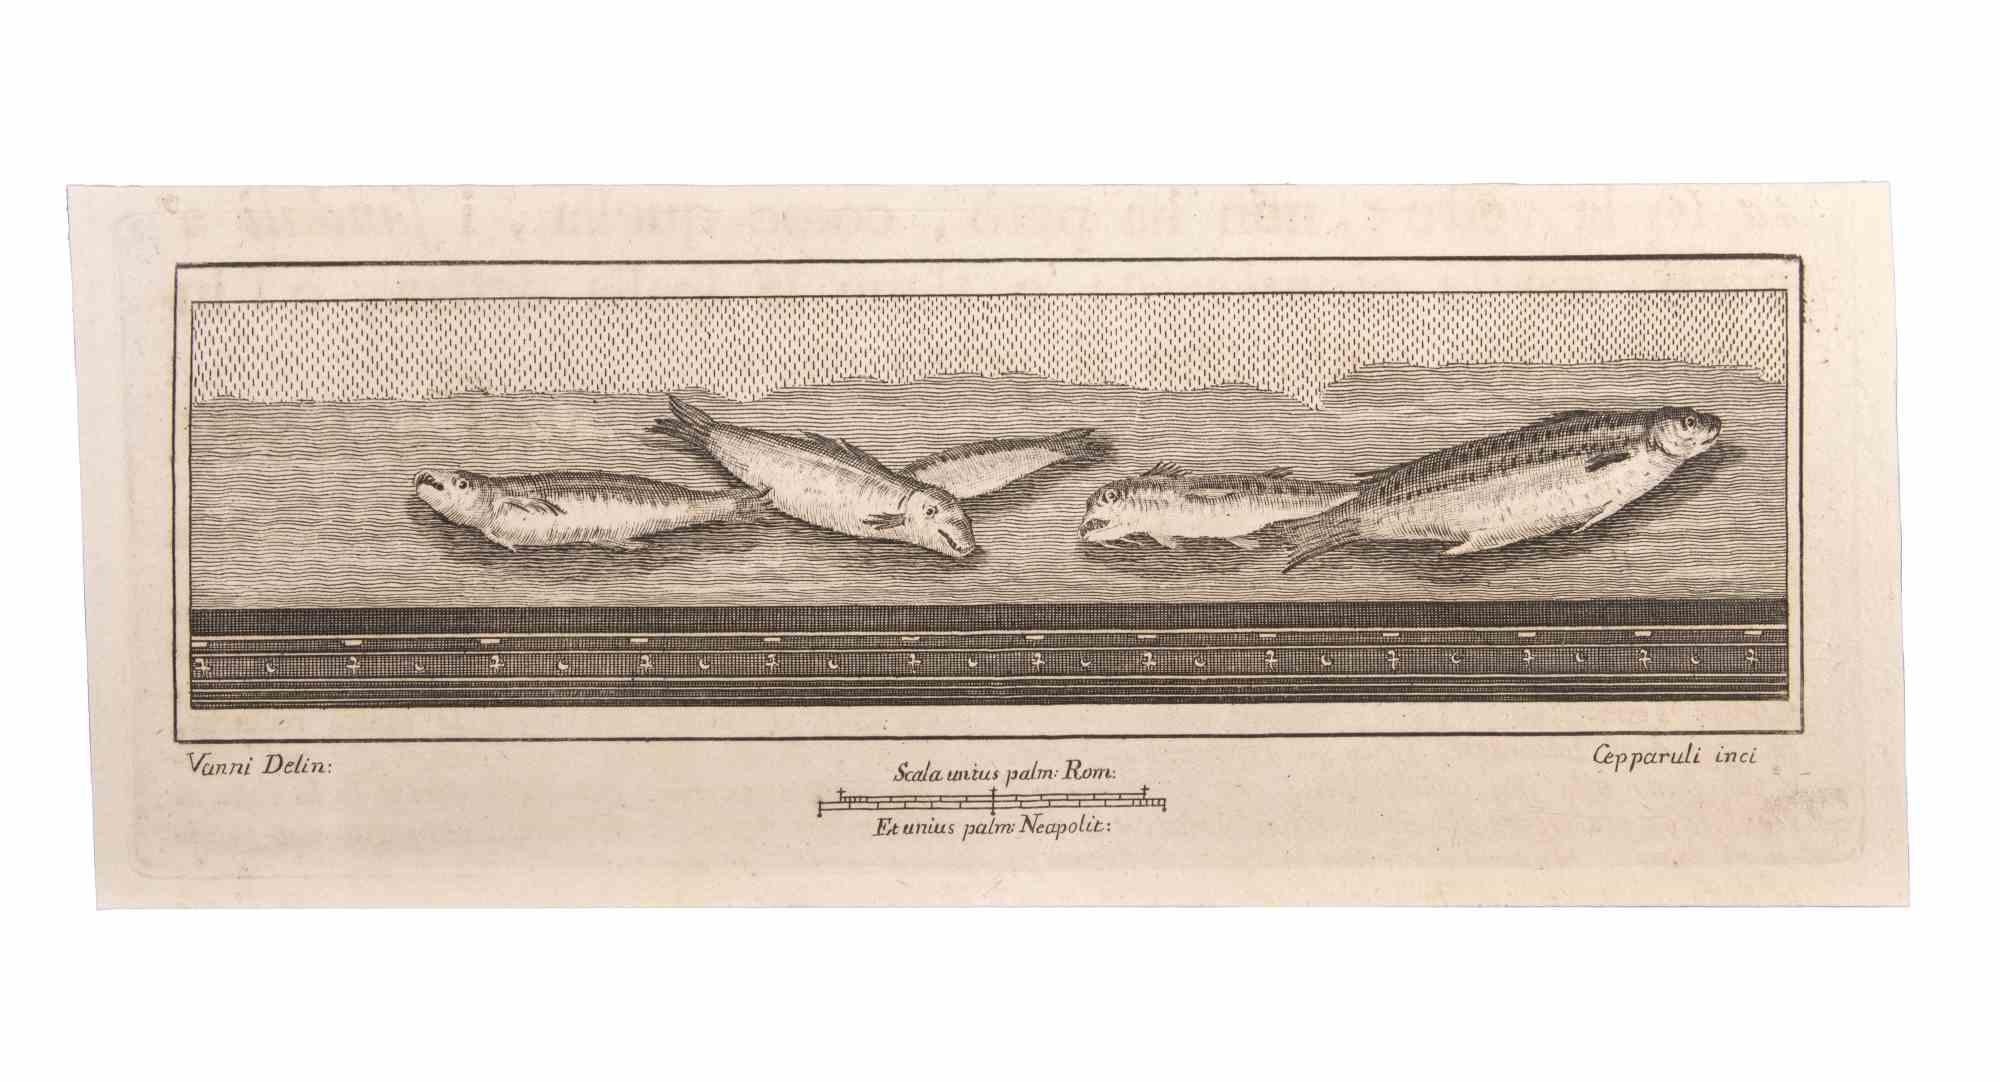 Francesco Cepparuli Figurative Print - Decoration With Fishes - Etching by F. Cepparuli - 18th Century